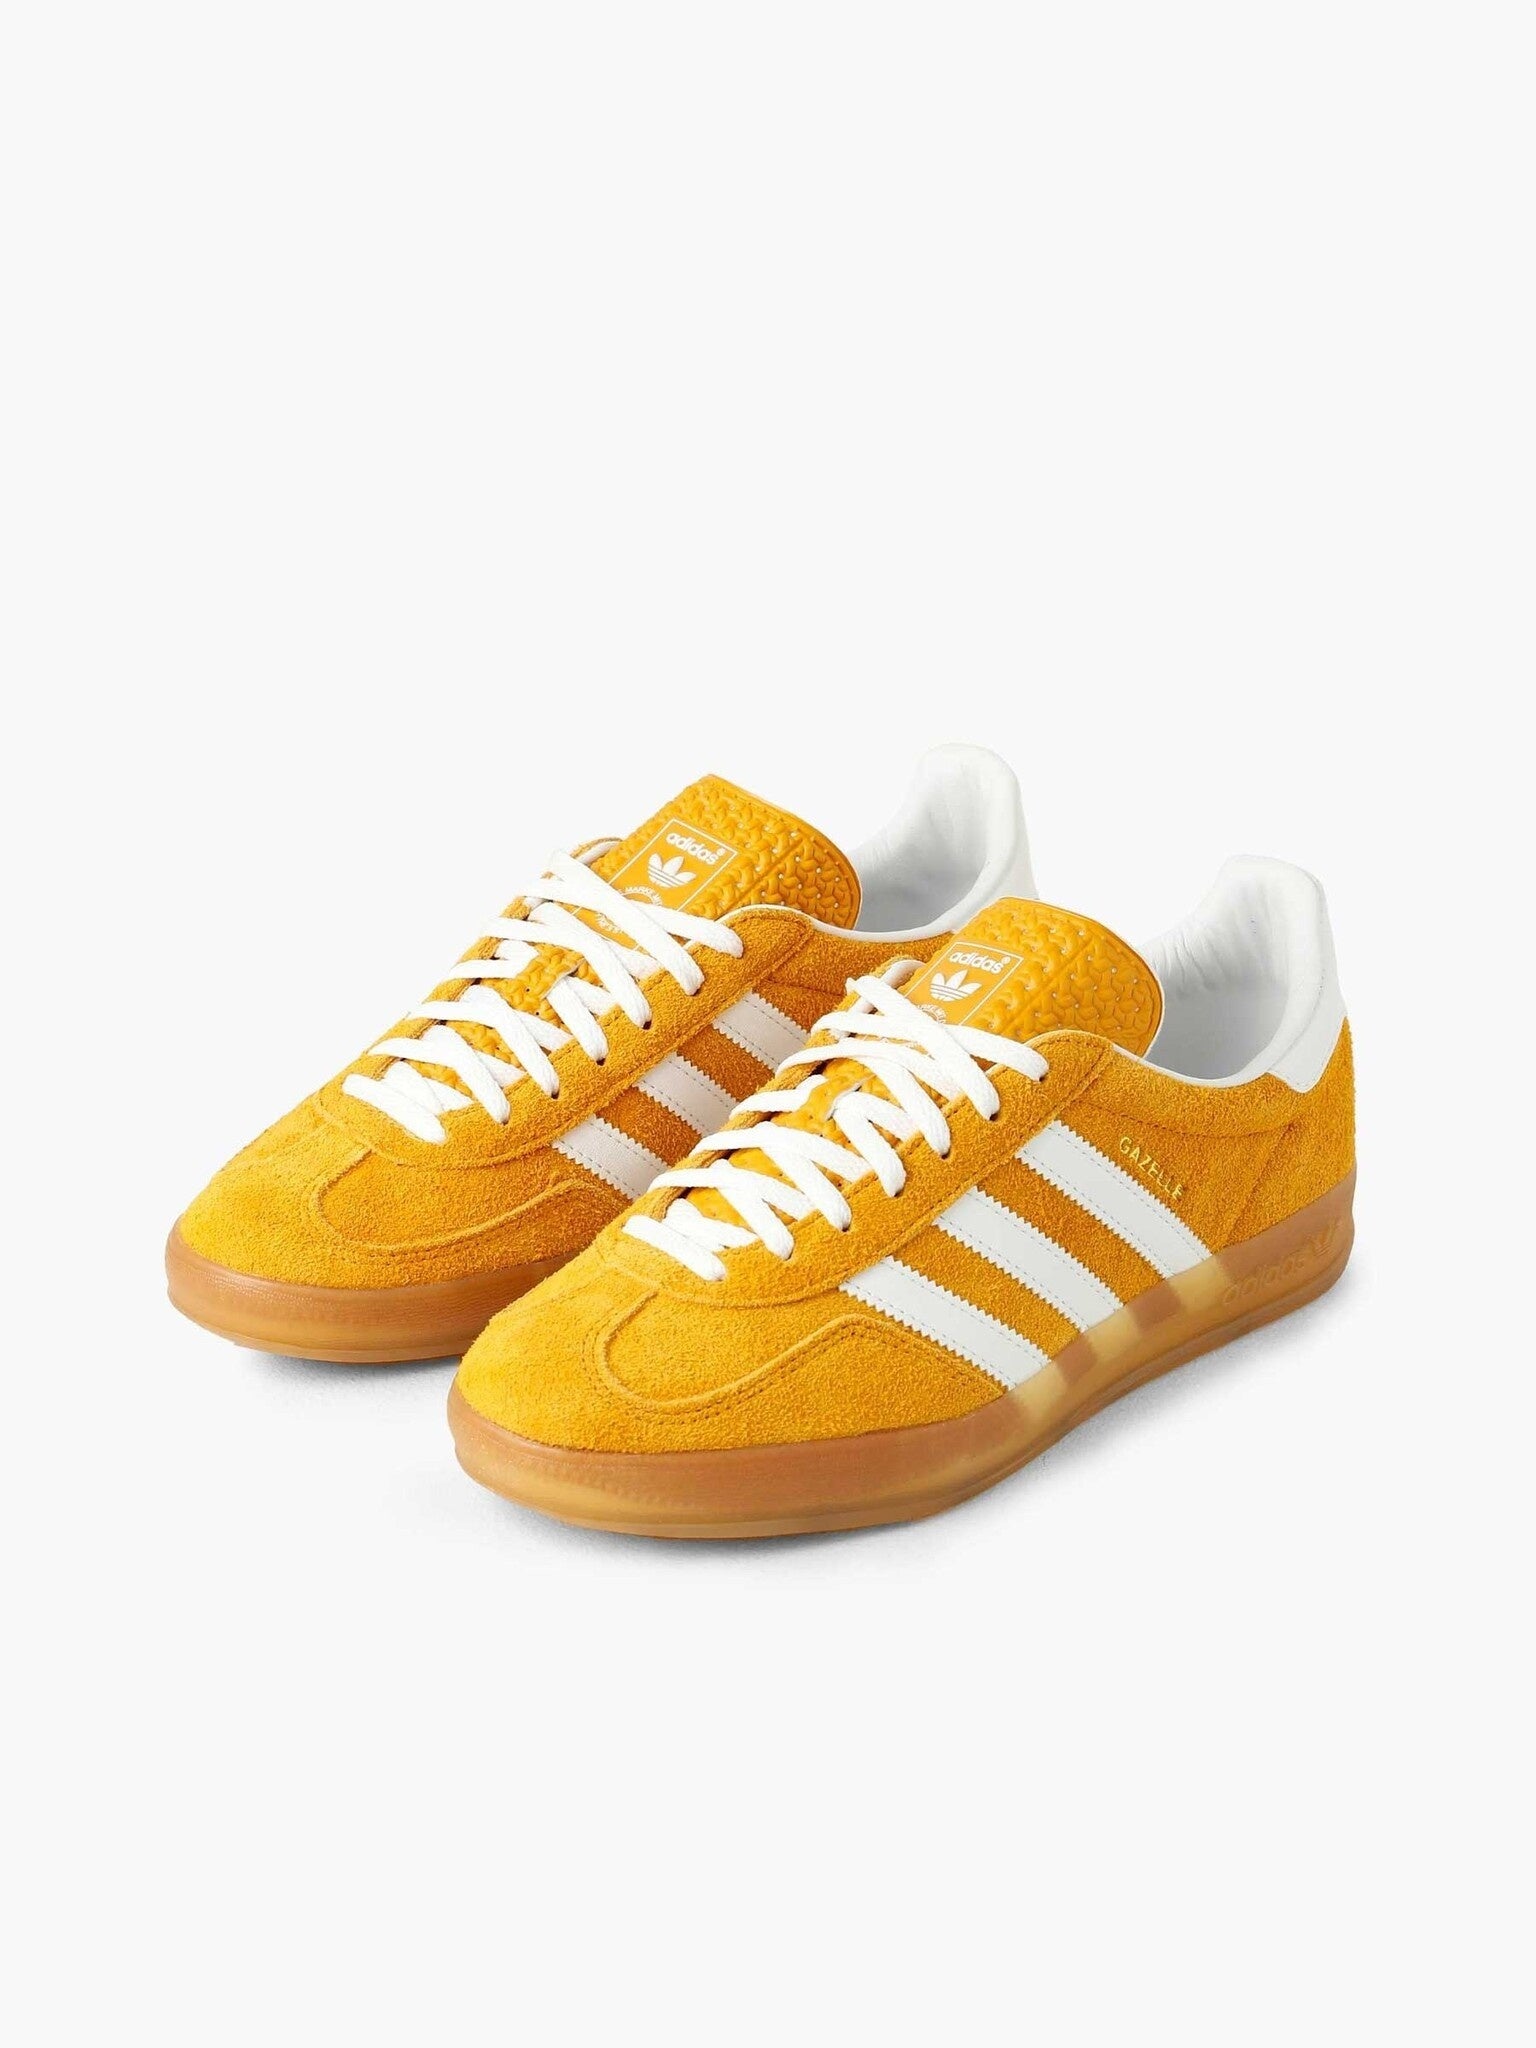 Adidas Gazelle Indoor Orange Peel 'White' (W)